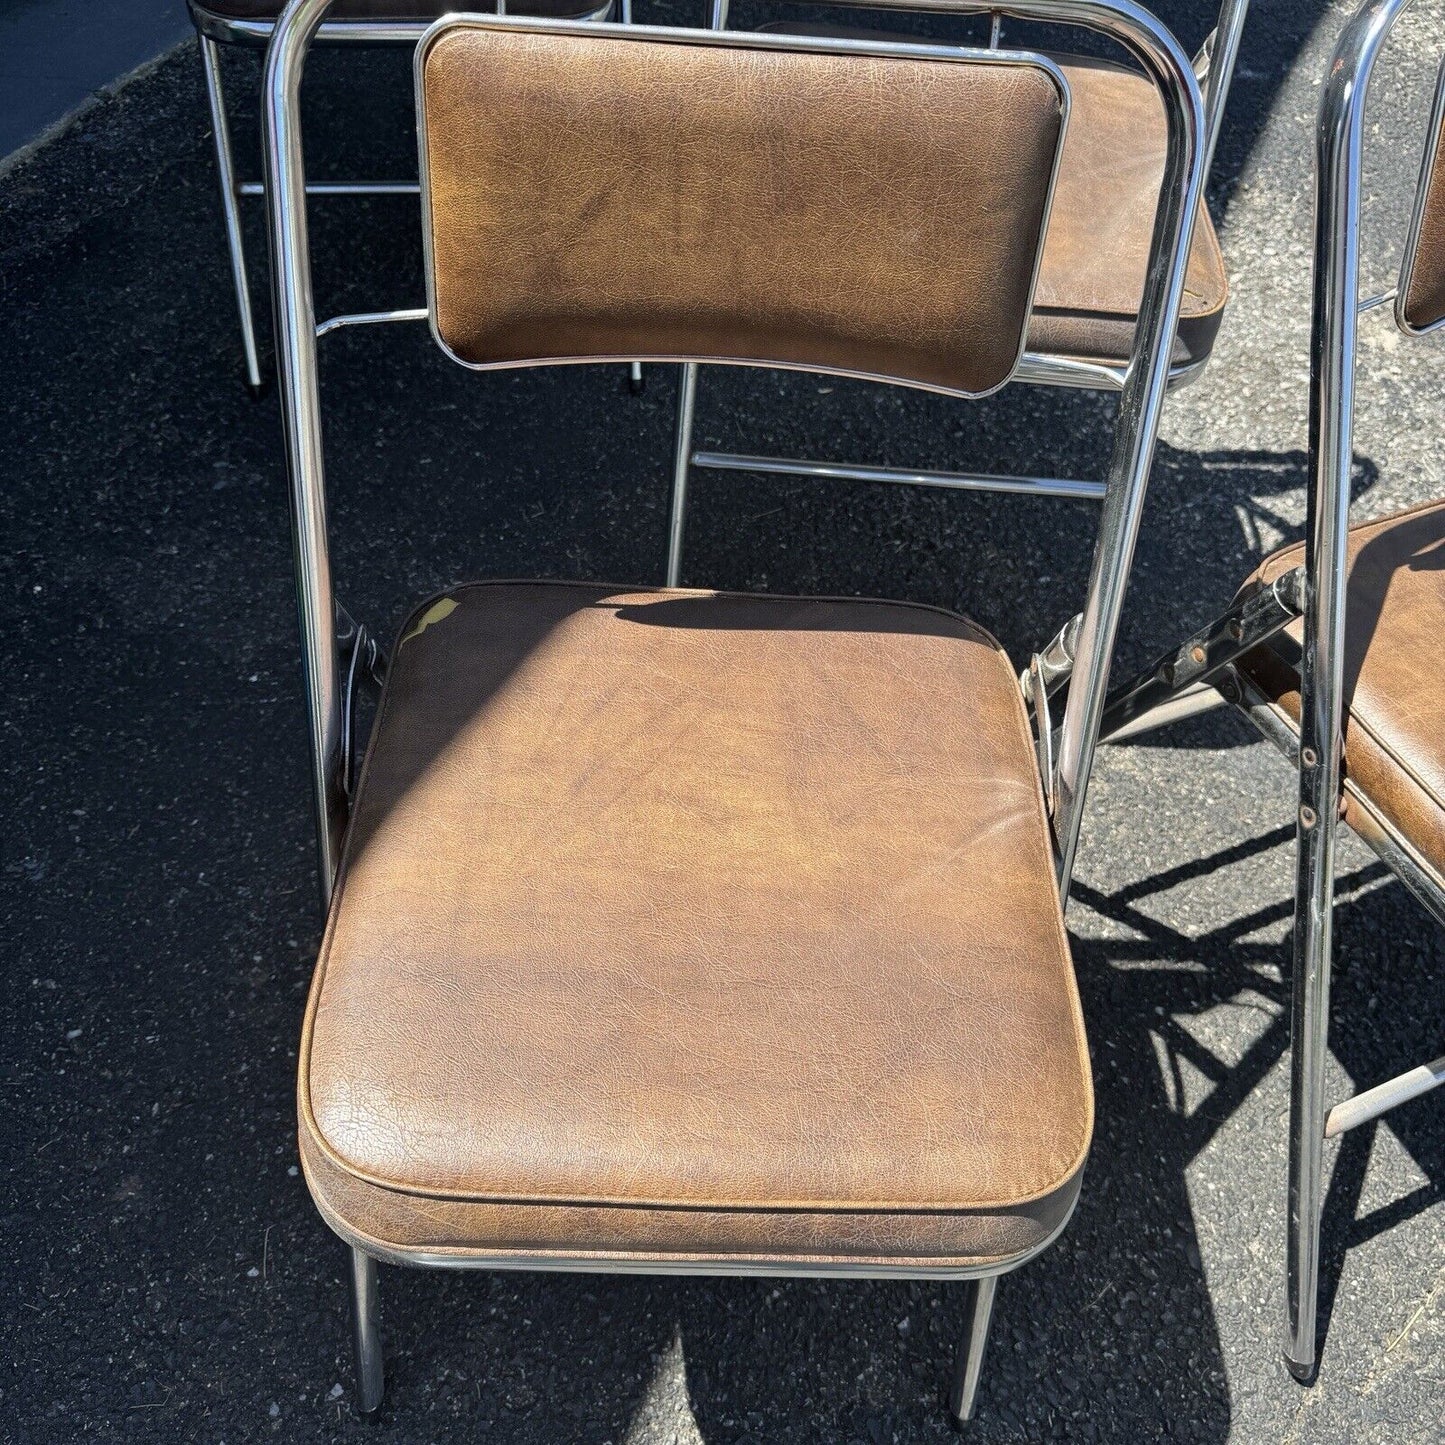 4 VTG 1979 Samsonite 5875 Metal Folding Chairs Brown MCM Art Deco Style (Worn)